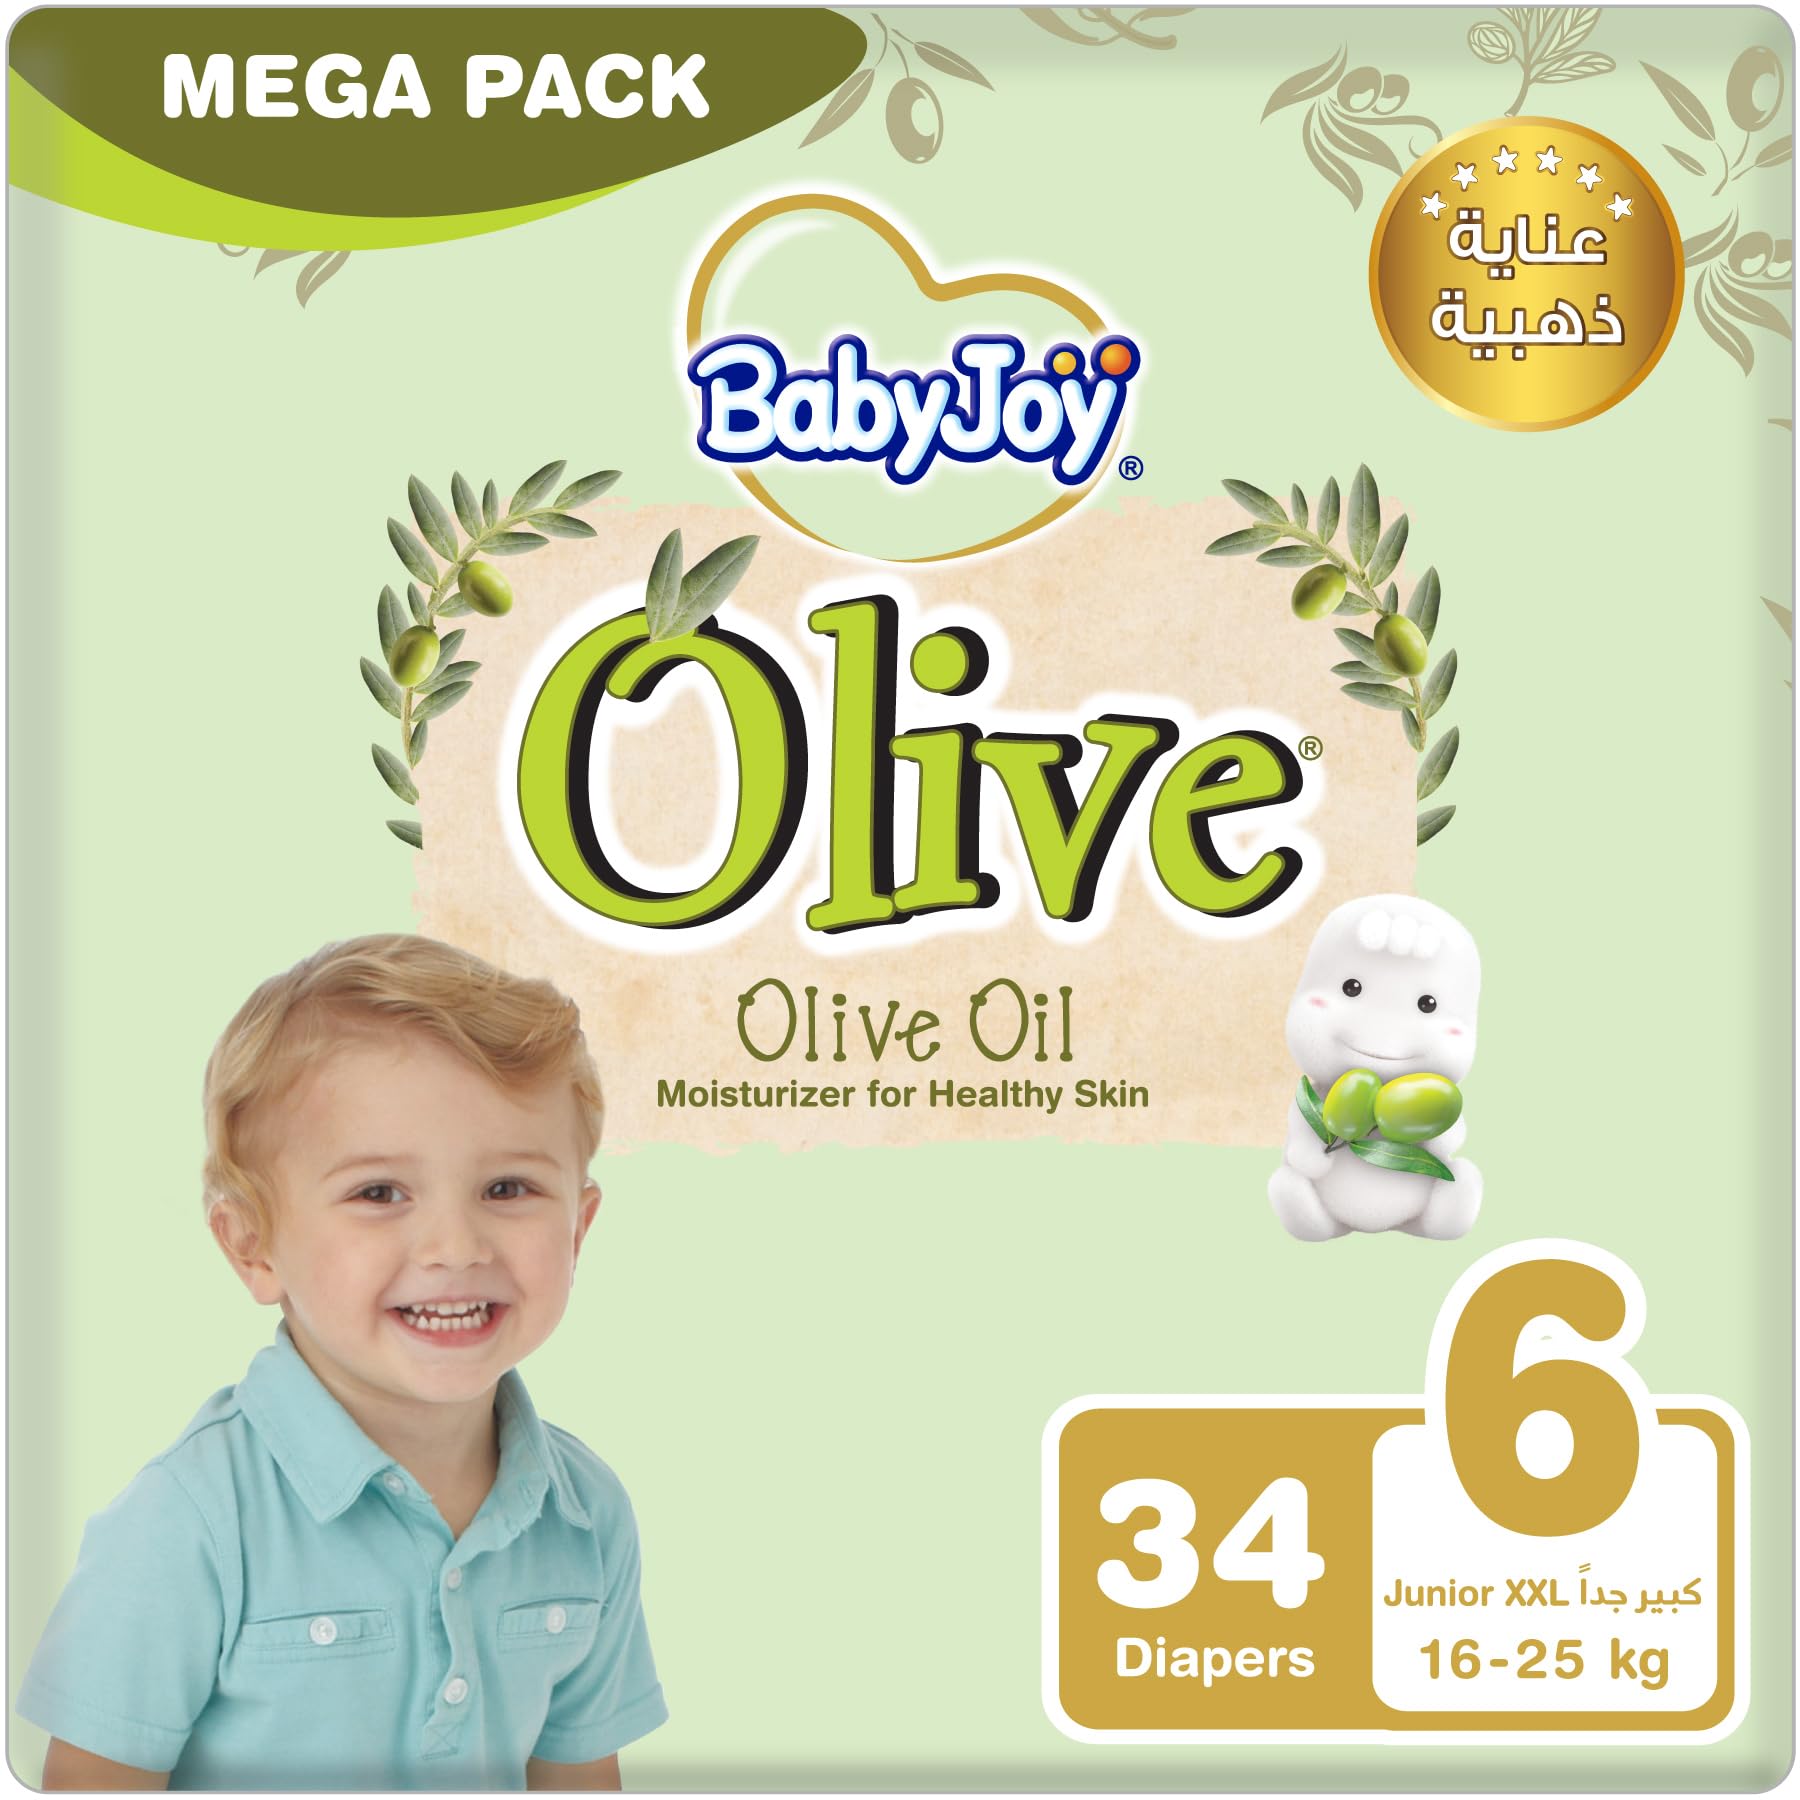 BabyJoy Olive Tape Diaper, Size 6, Junior XXL, 16-25 Kg, Mega Pack, 34 Diapers